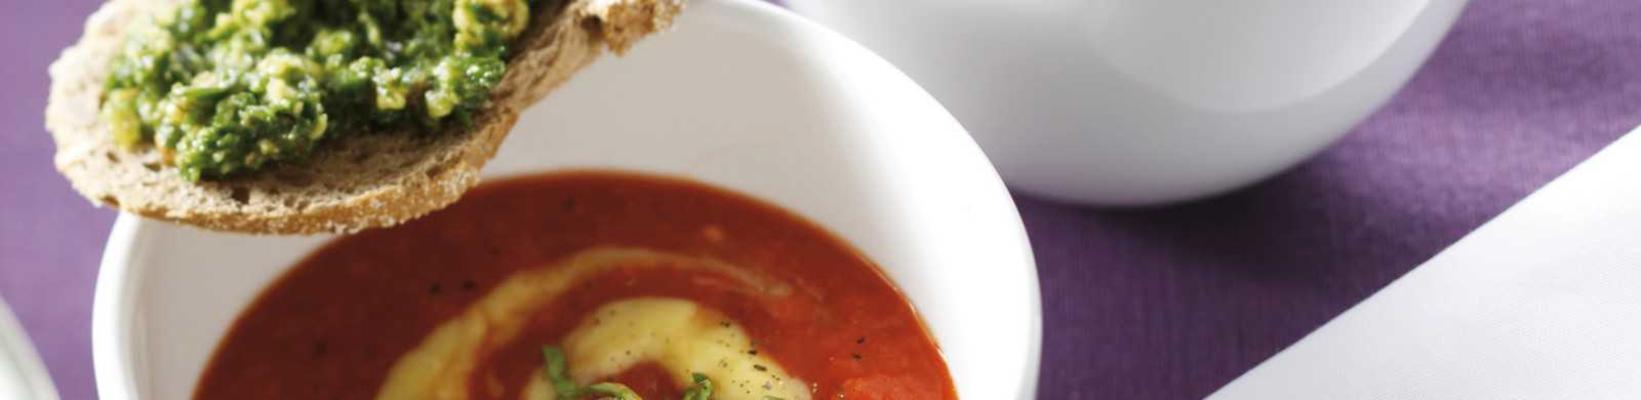 tomato-paprika soup with spinach-nutcrostini